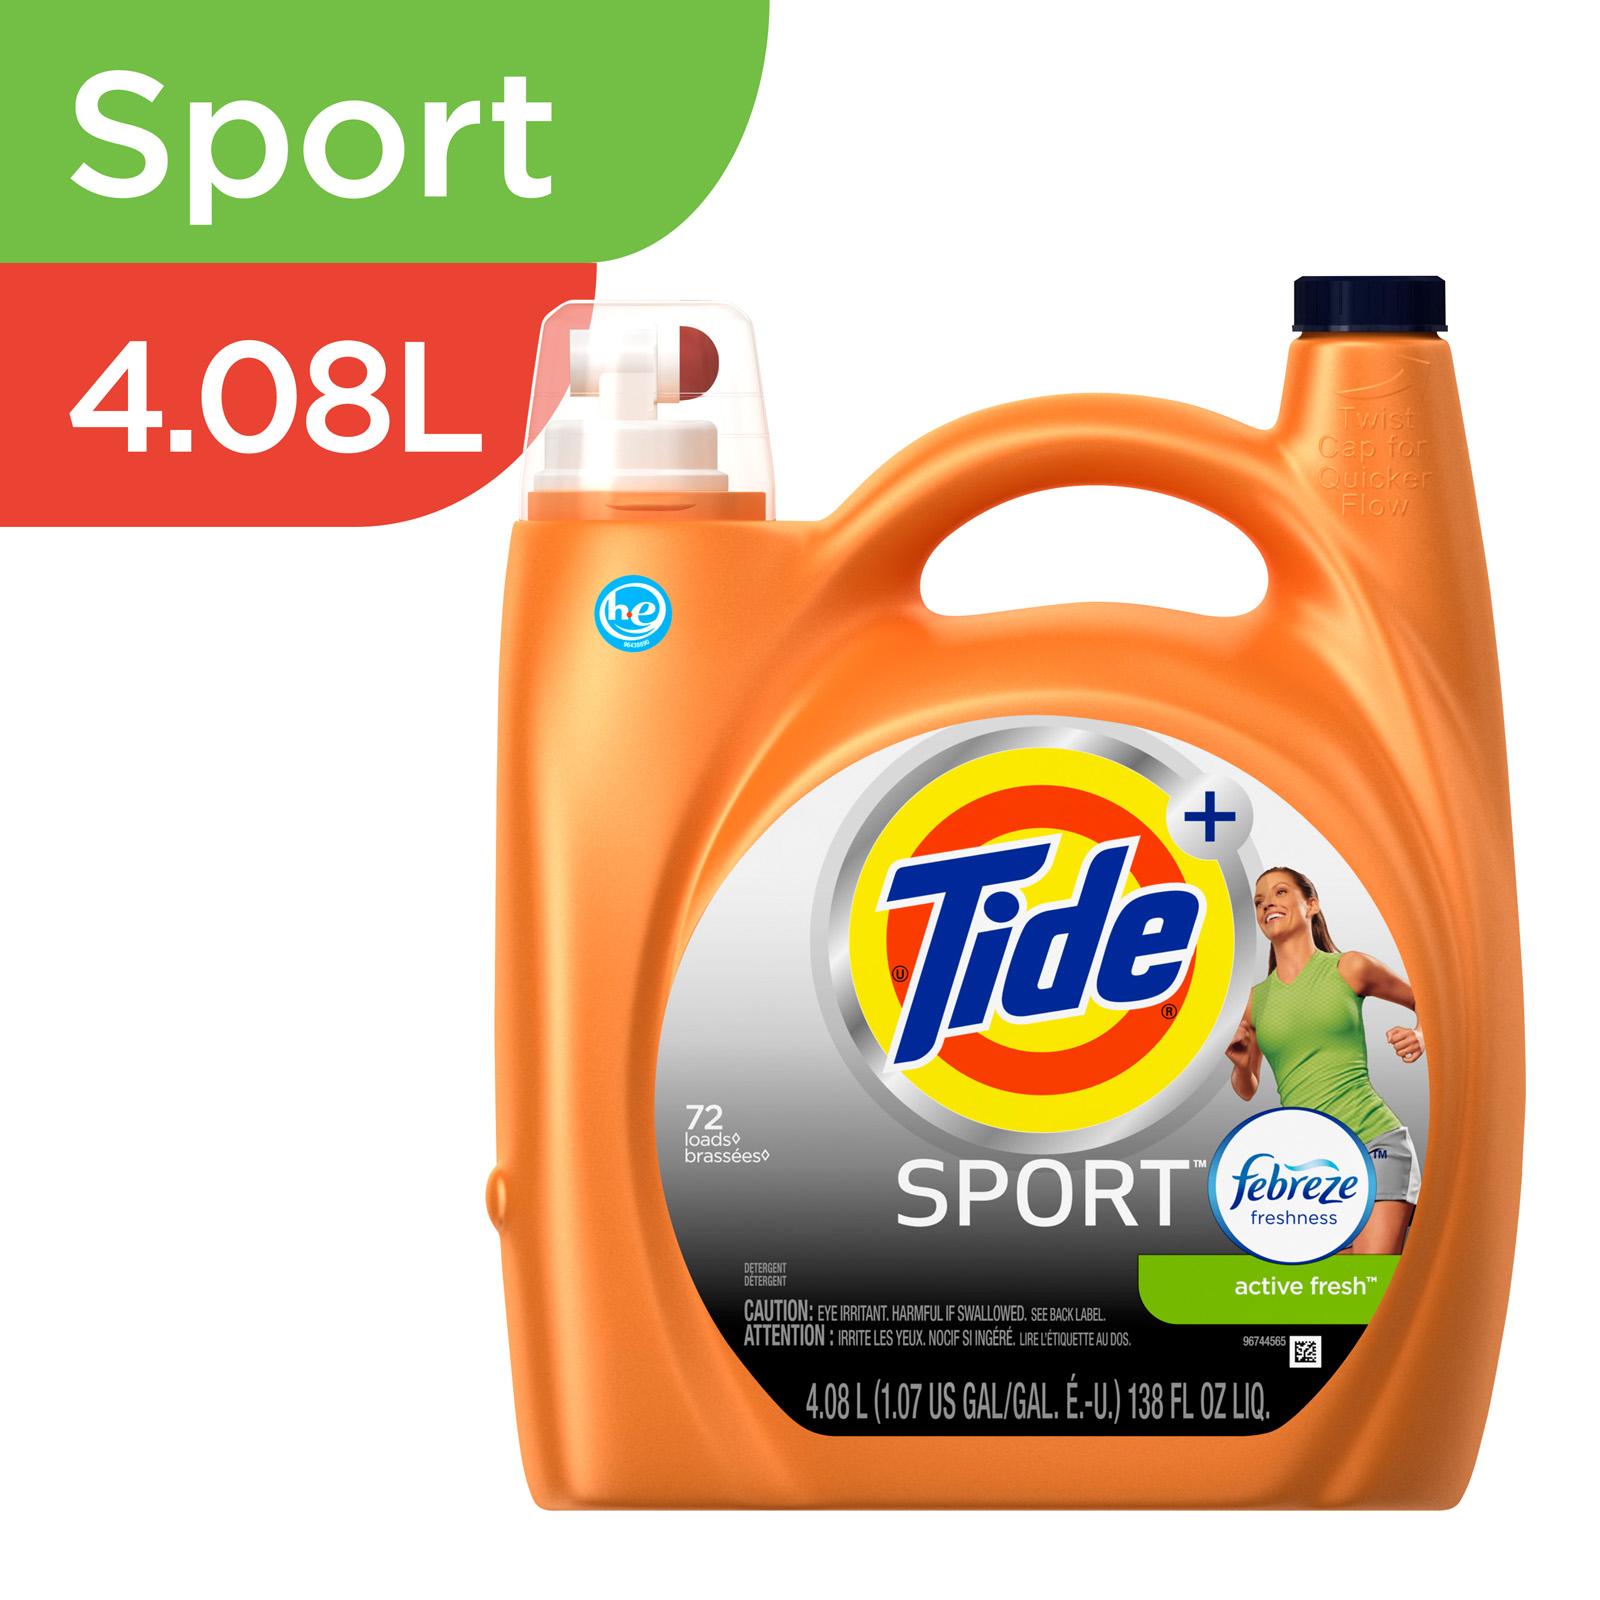 sports laundry detergent